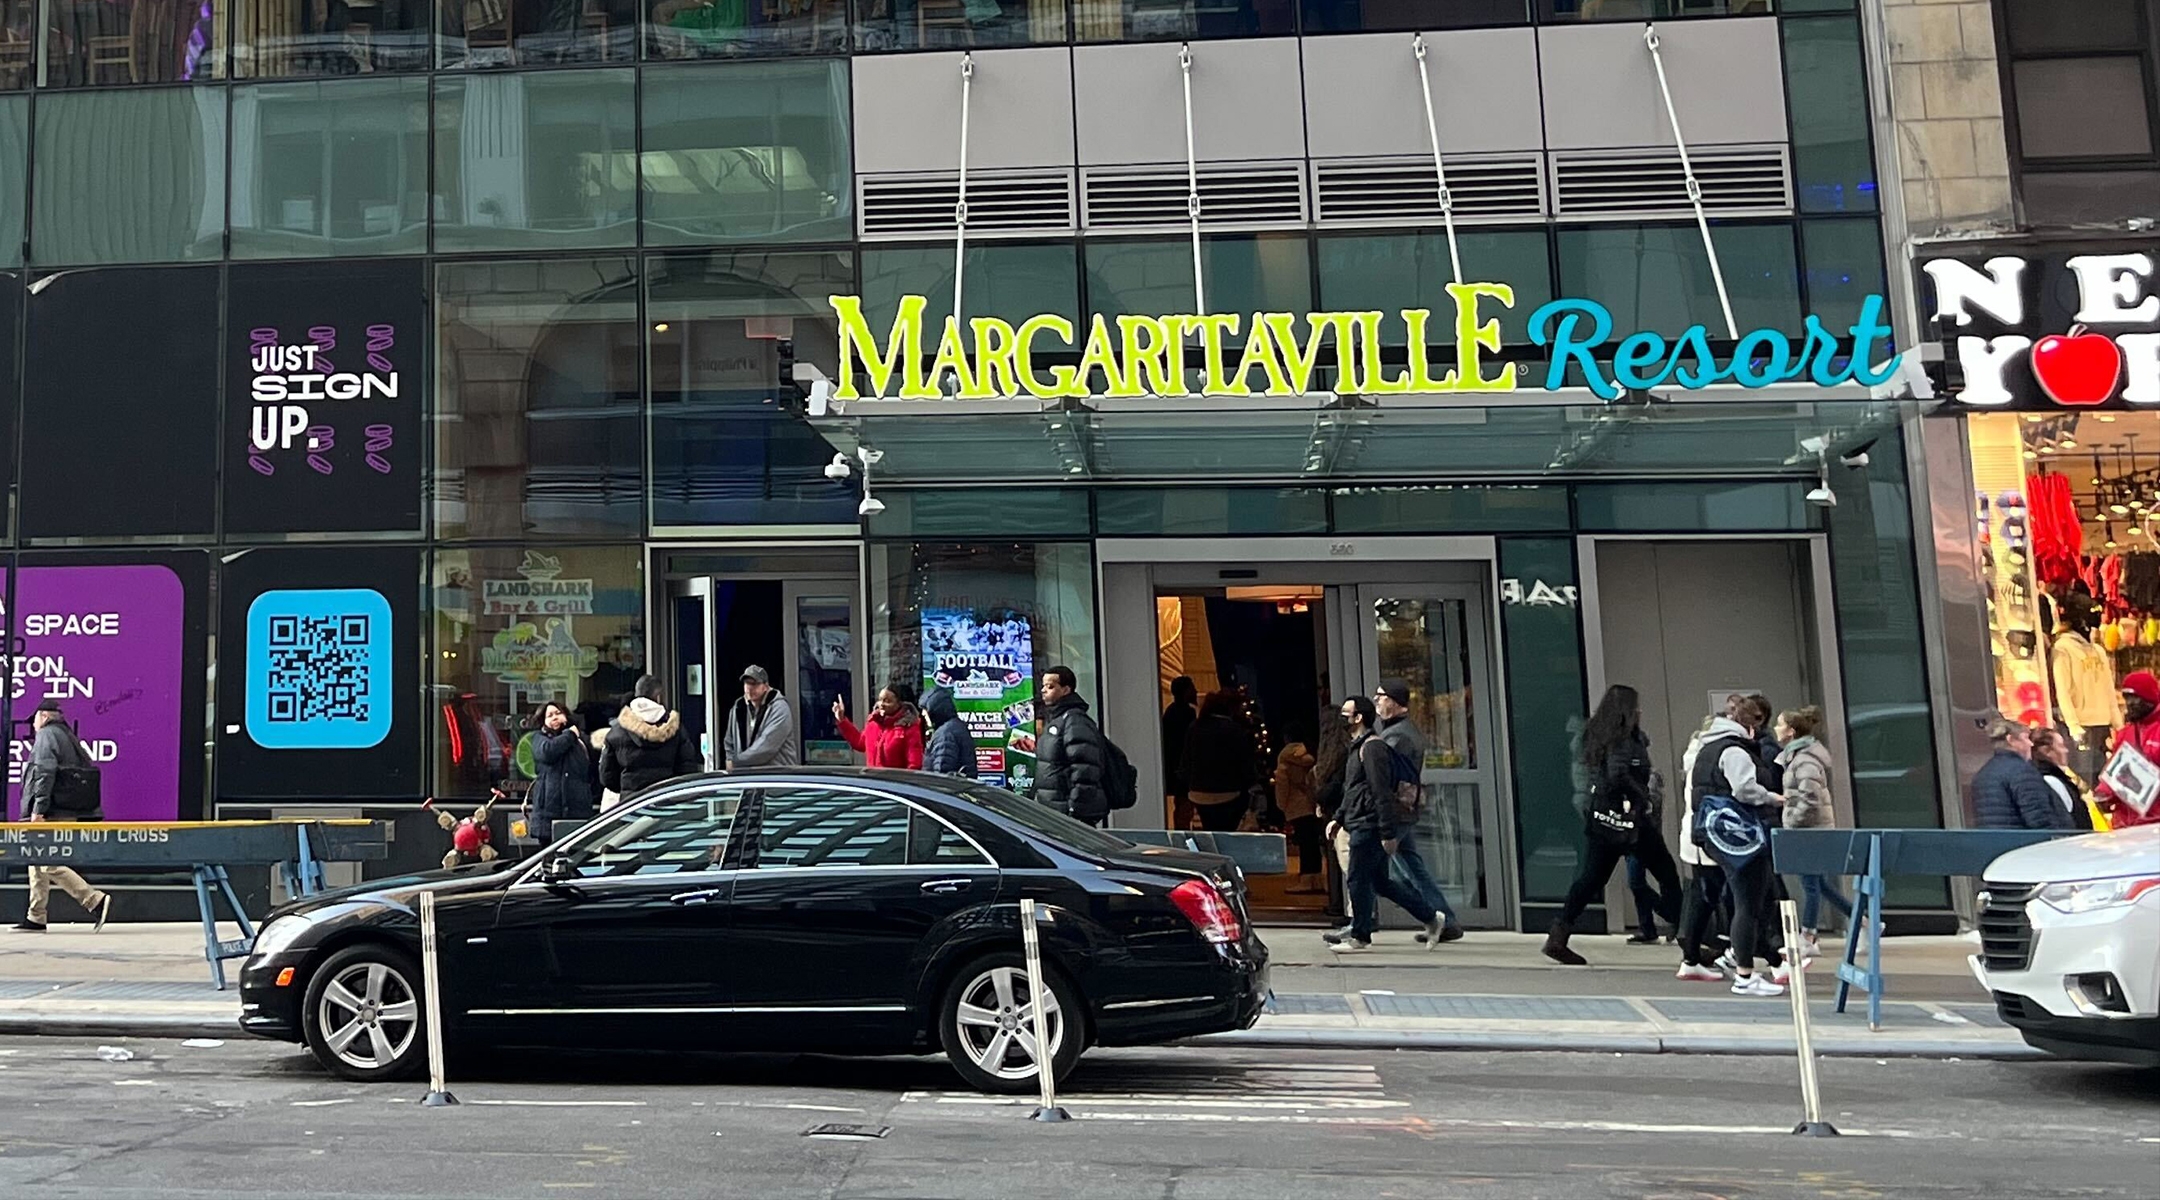 Margaritaville NYC